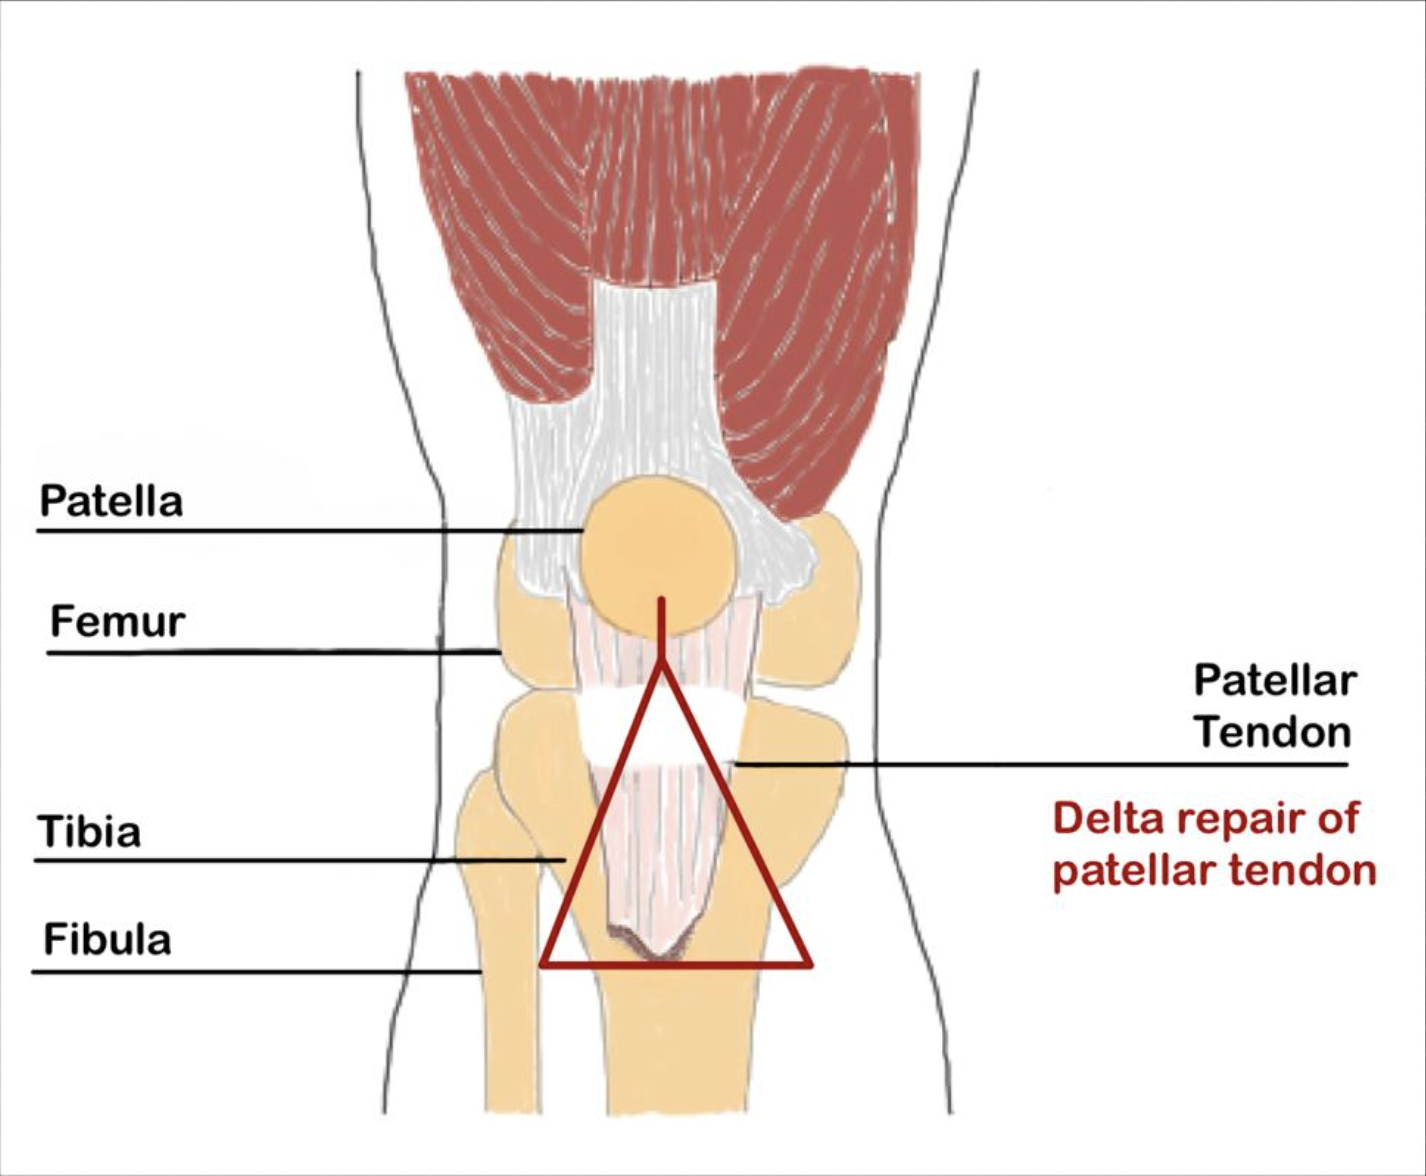 https://journaloei.scholasticahq.com/article/67846-delta-technique-reconstruction-of-a-failed-patellar-tendon-repair-a-case-report/attachment/135833.png